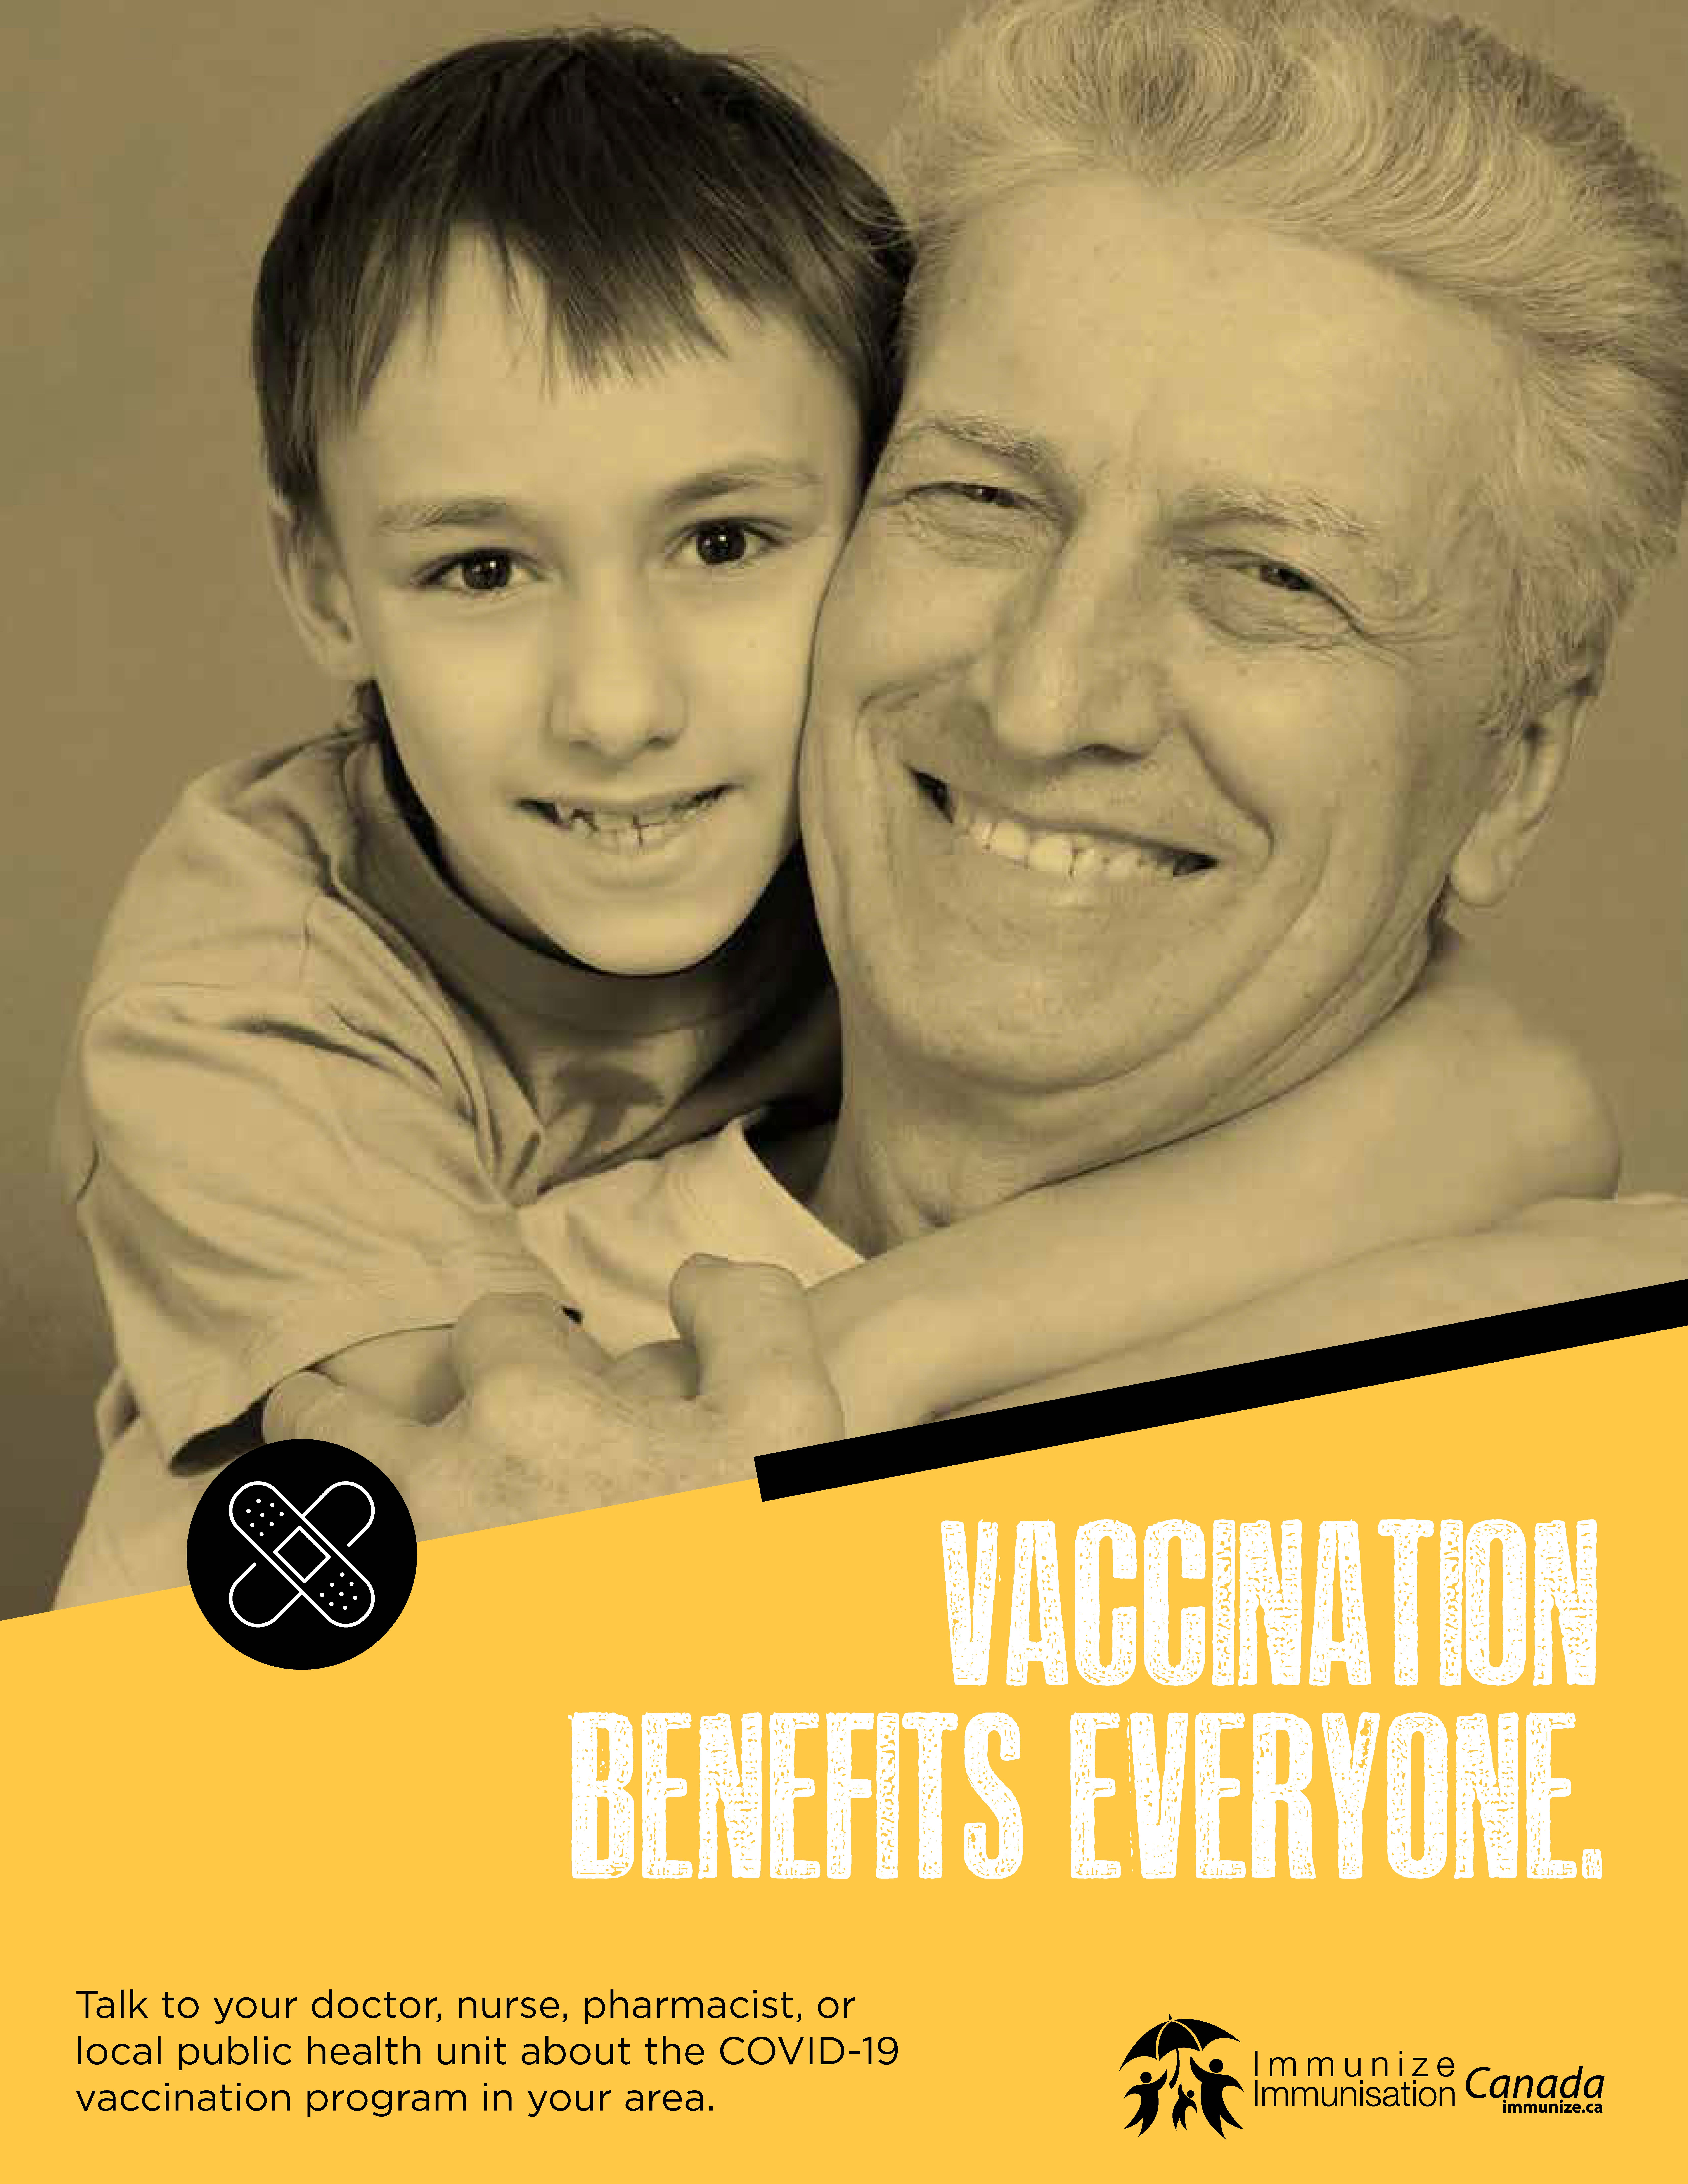 Vaccination benefits everyone (COVID-19).